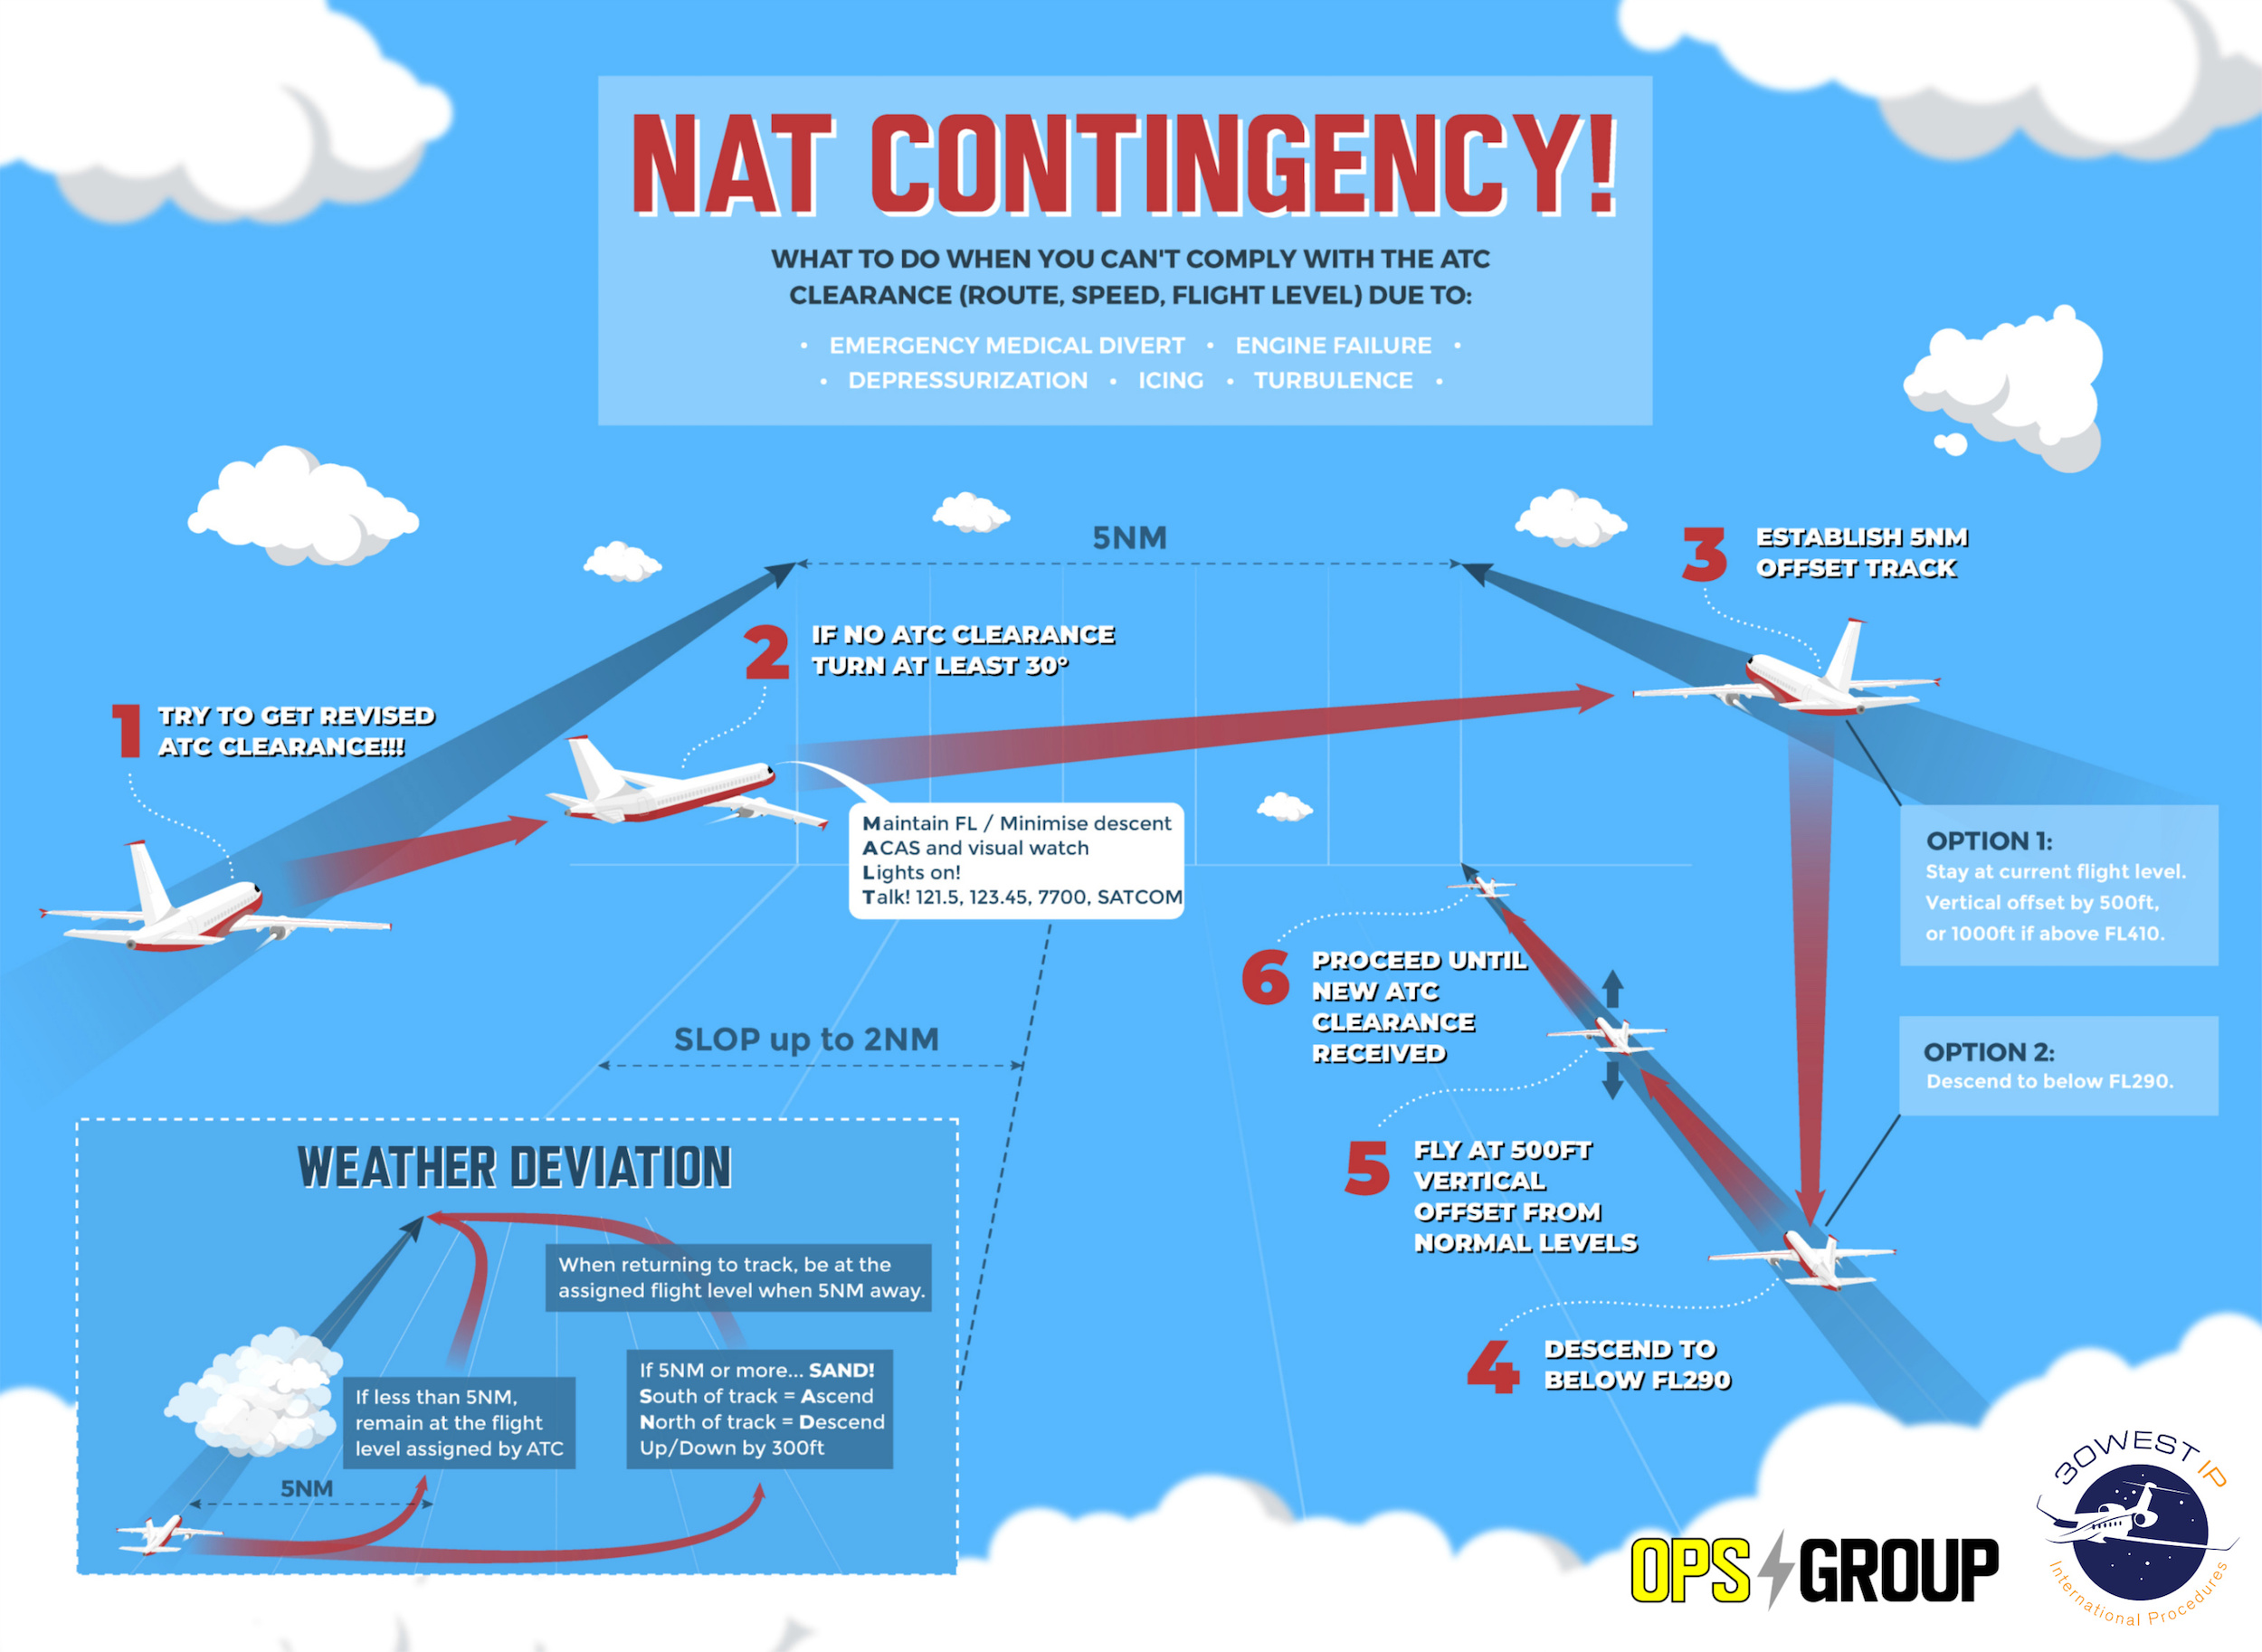 New NAT Contingency Procedures for 2019